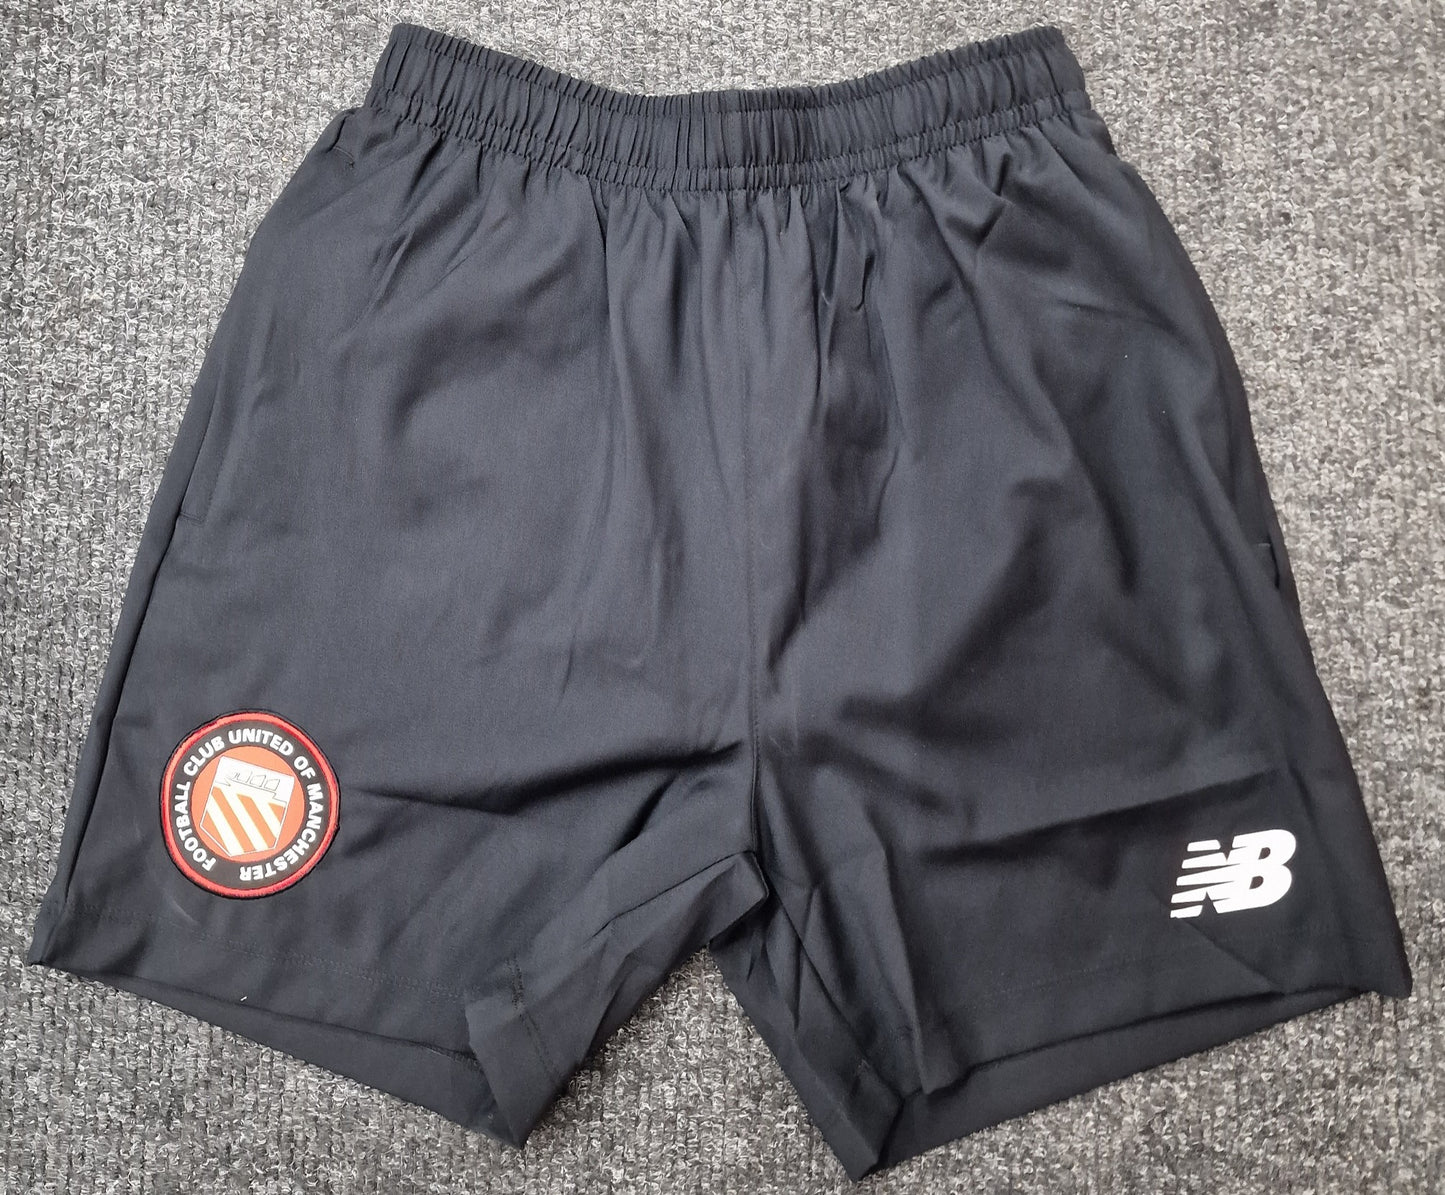 NEW Black Training Shorts